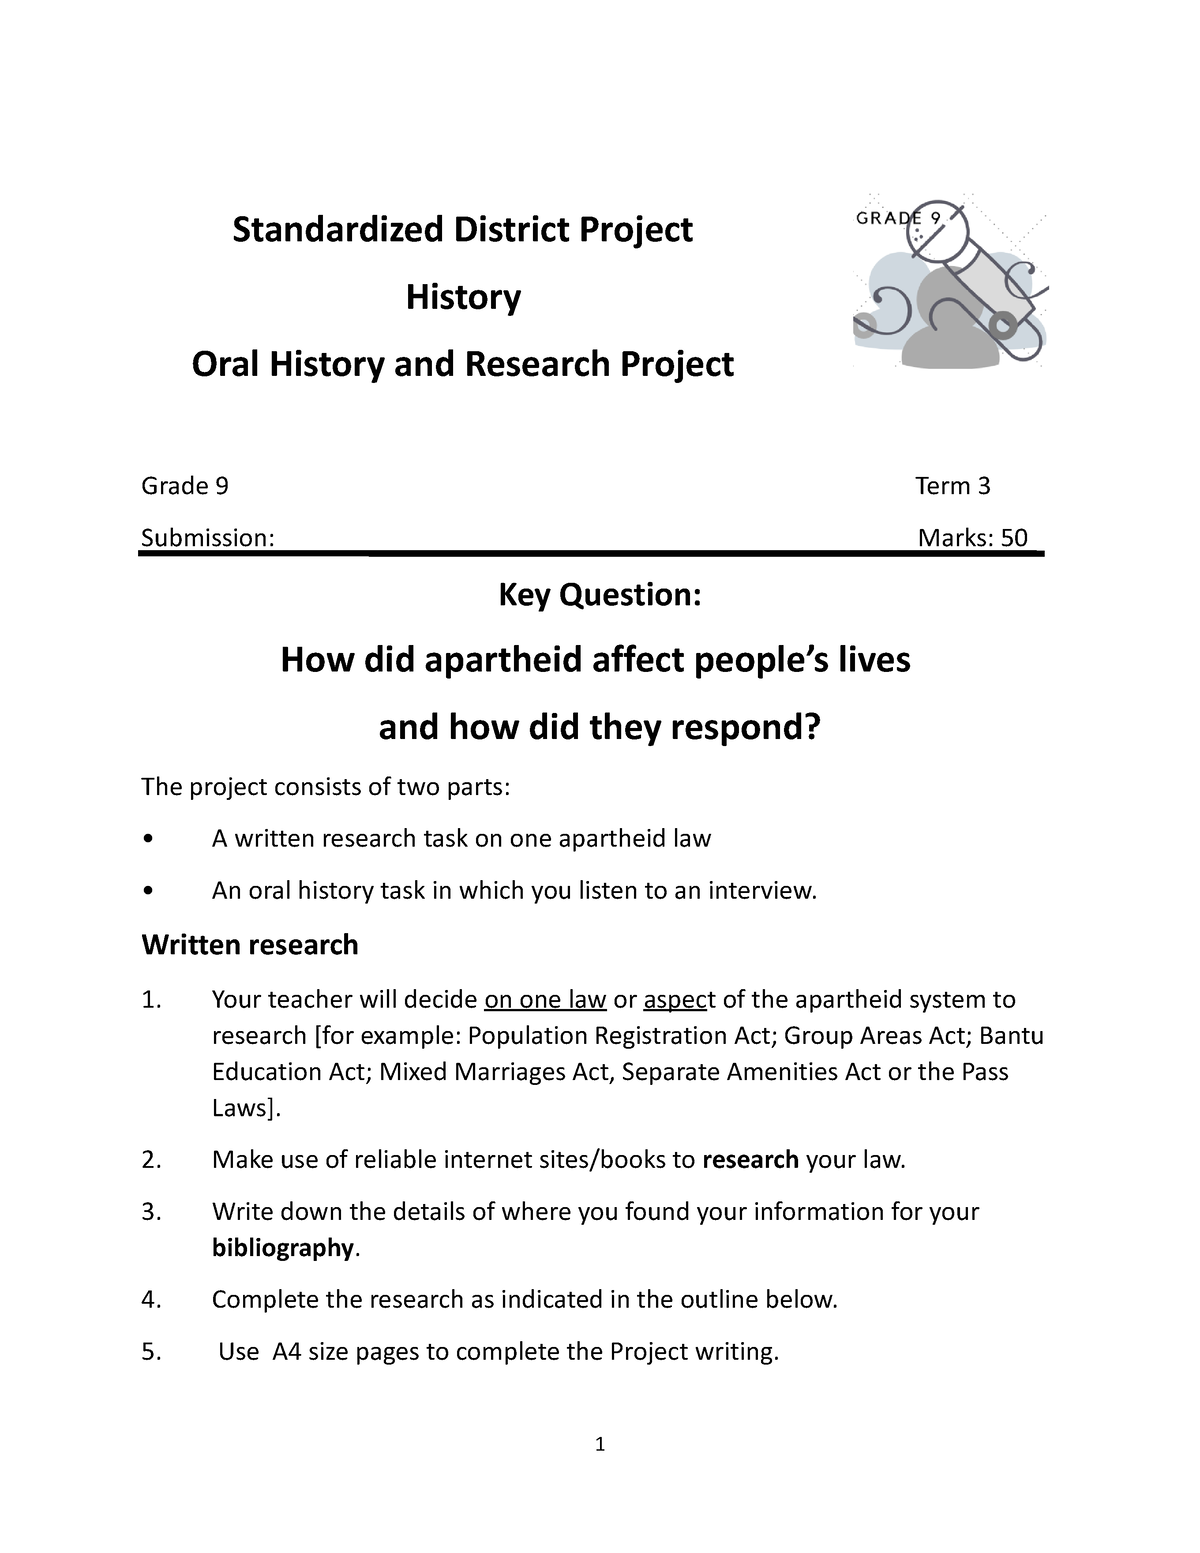 oral history and research project grade 9 memorandum